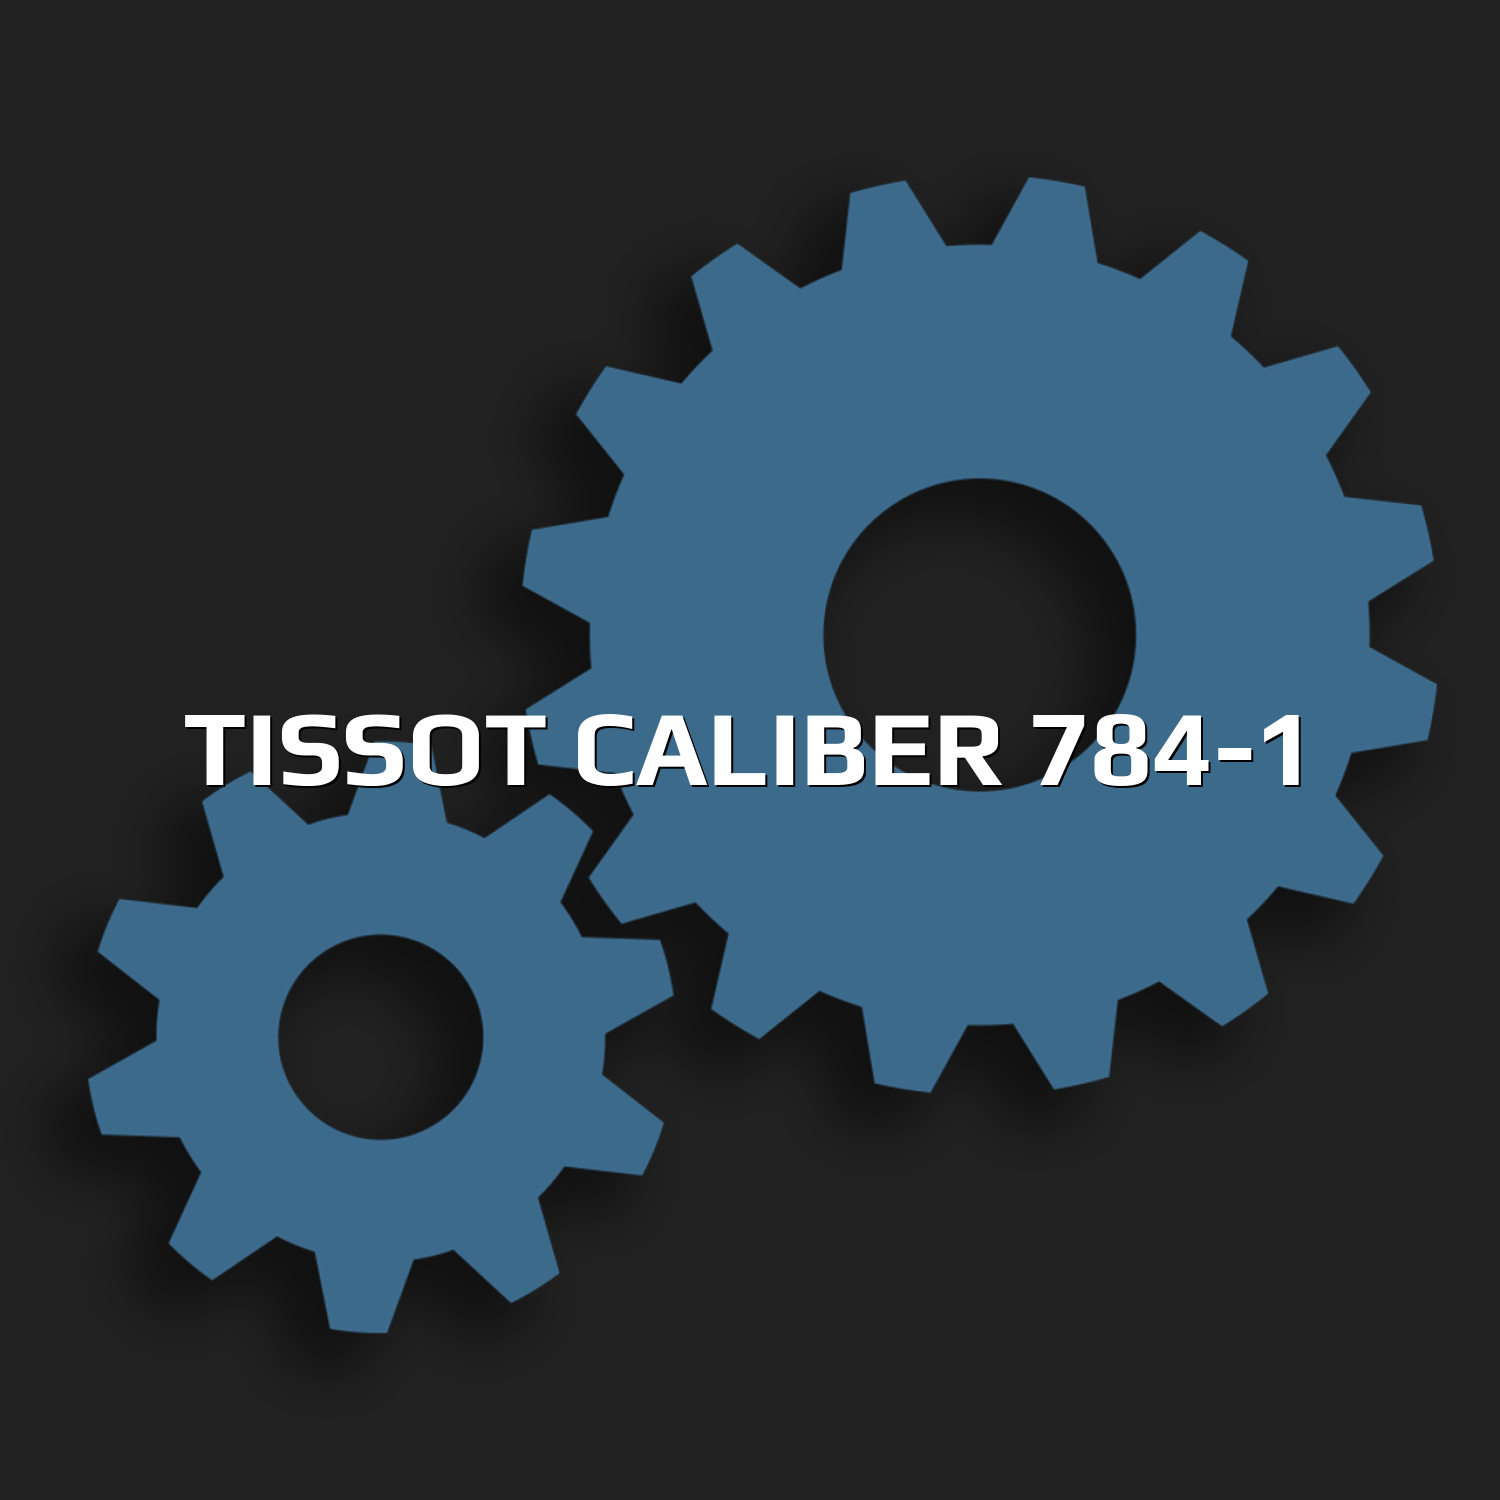 Tissot Caliber 784-1